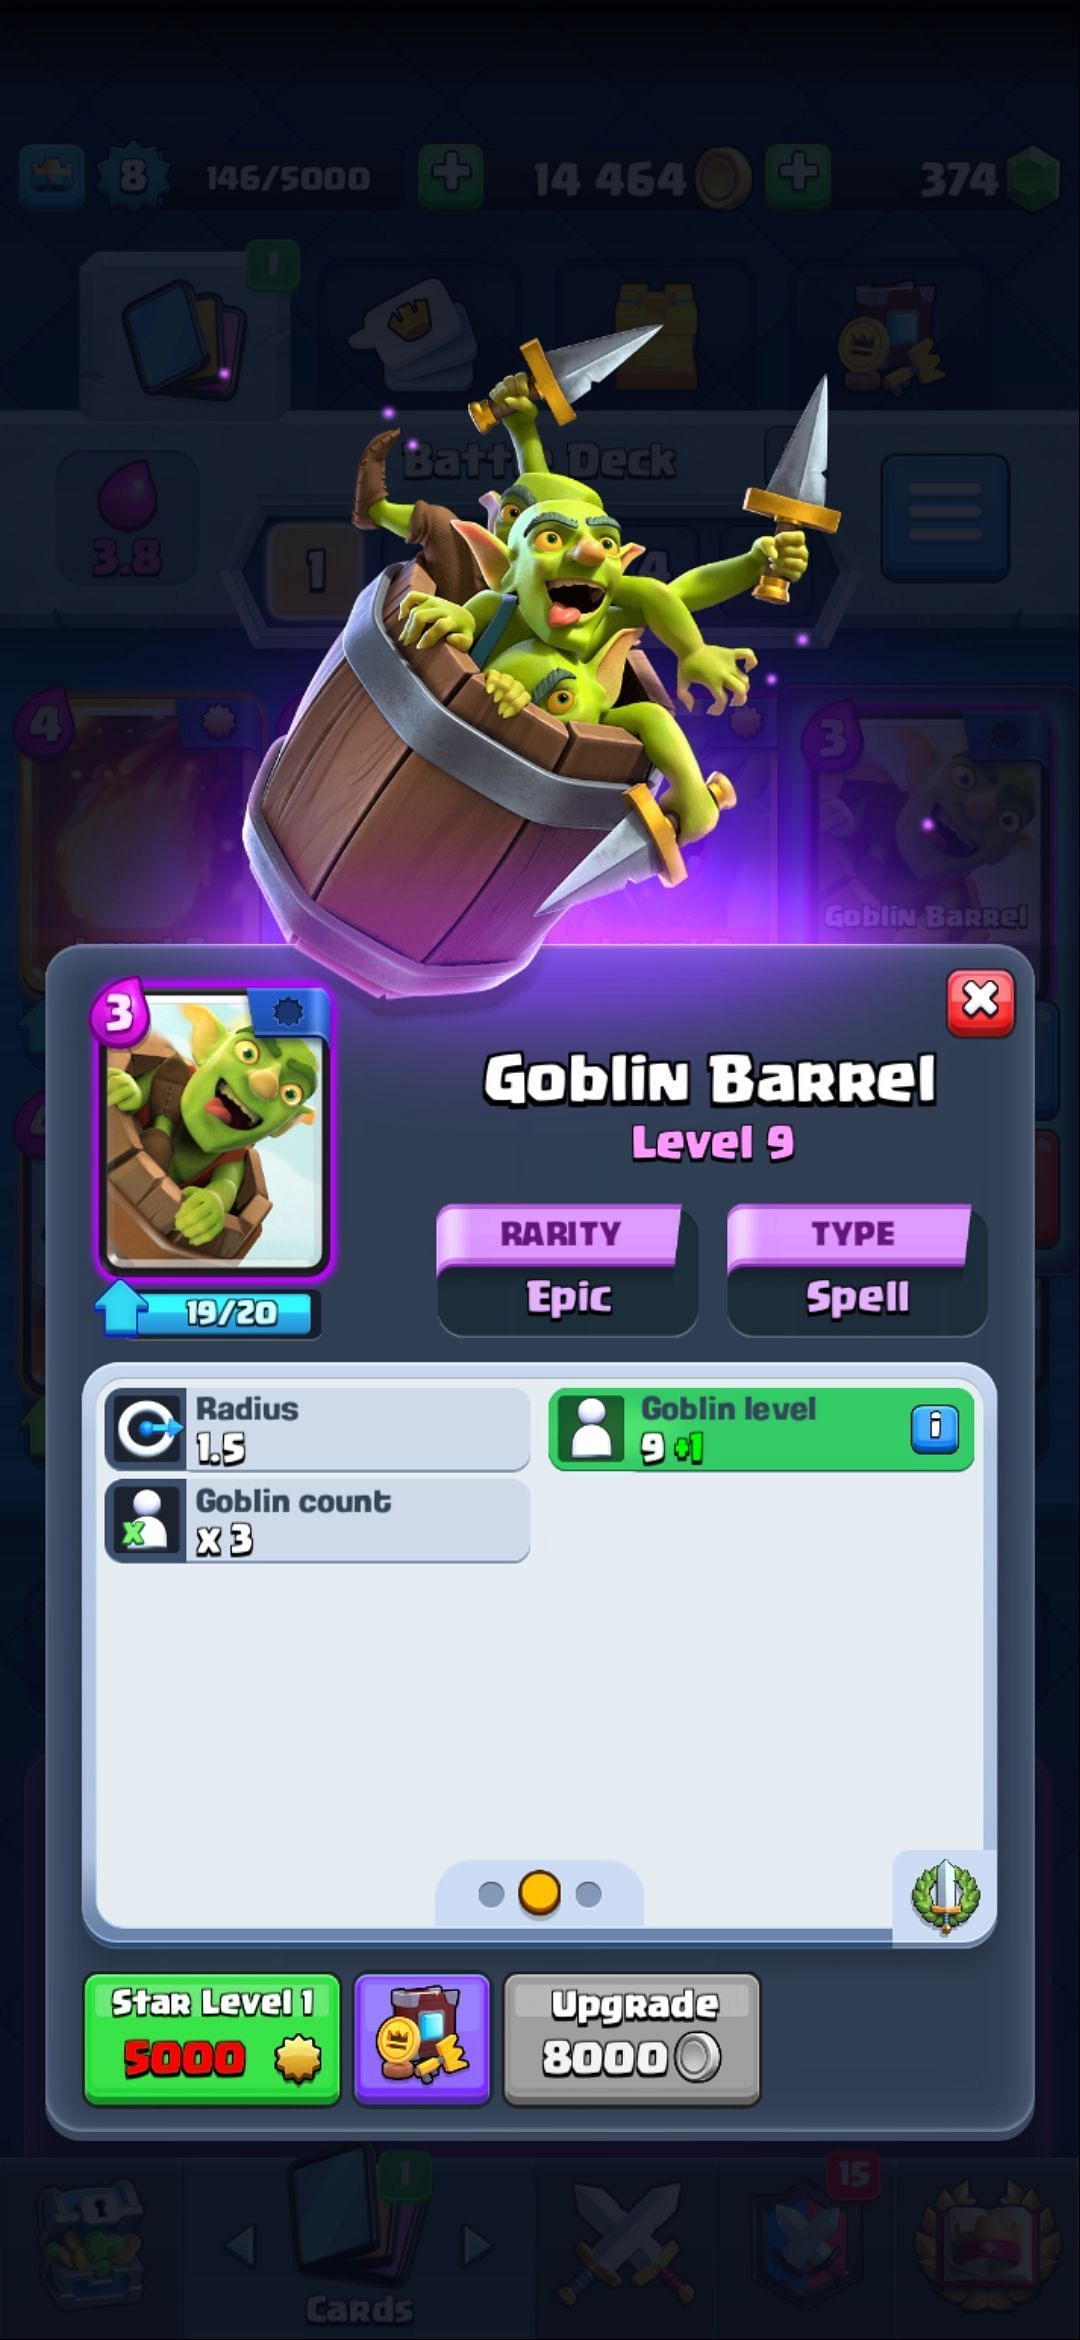 The Goblin Barrel (Image via Sportskeeda)